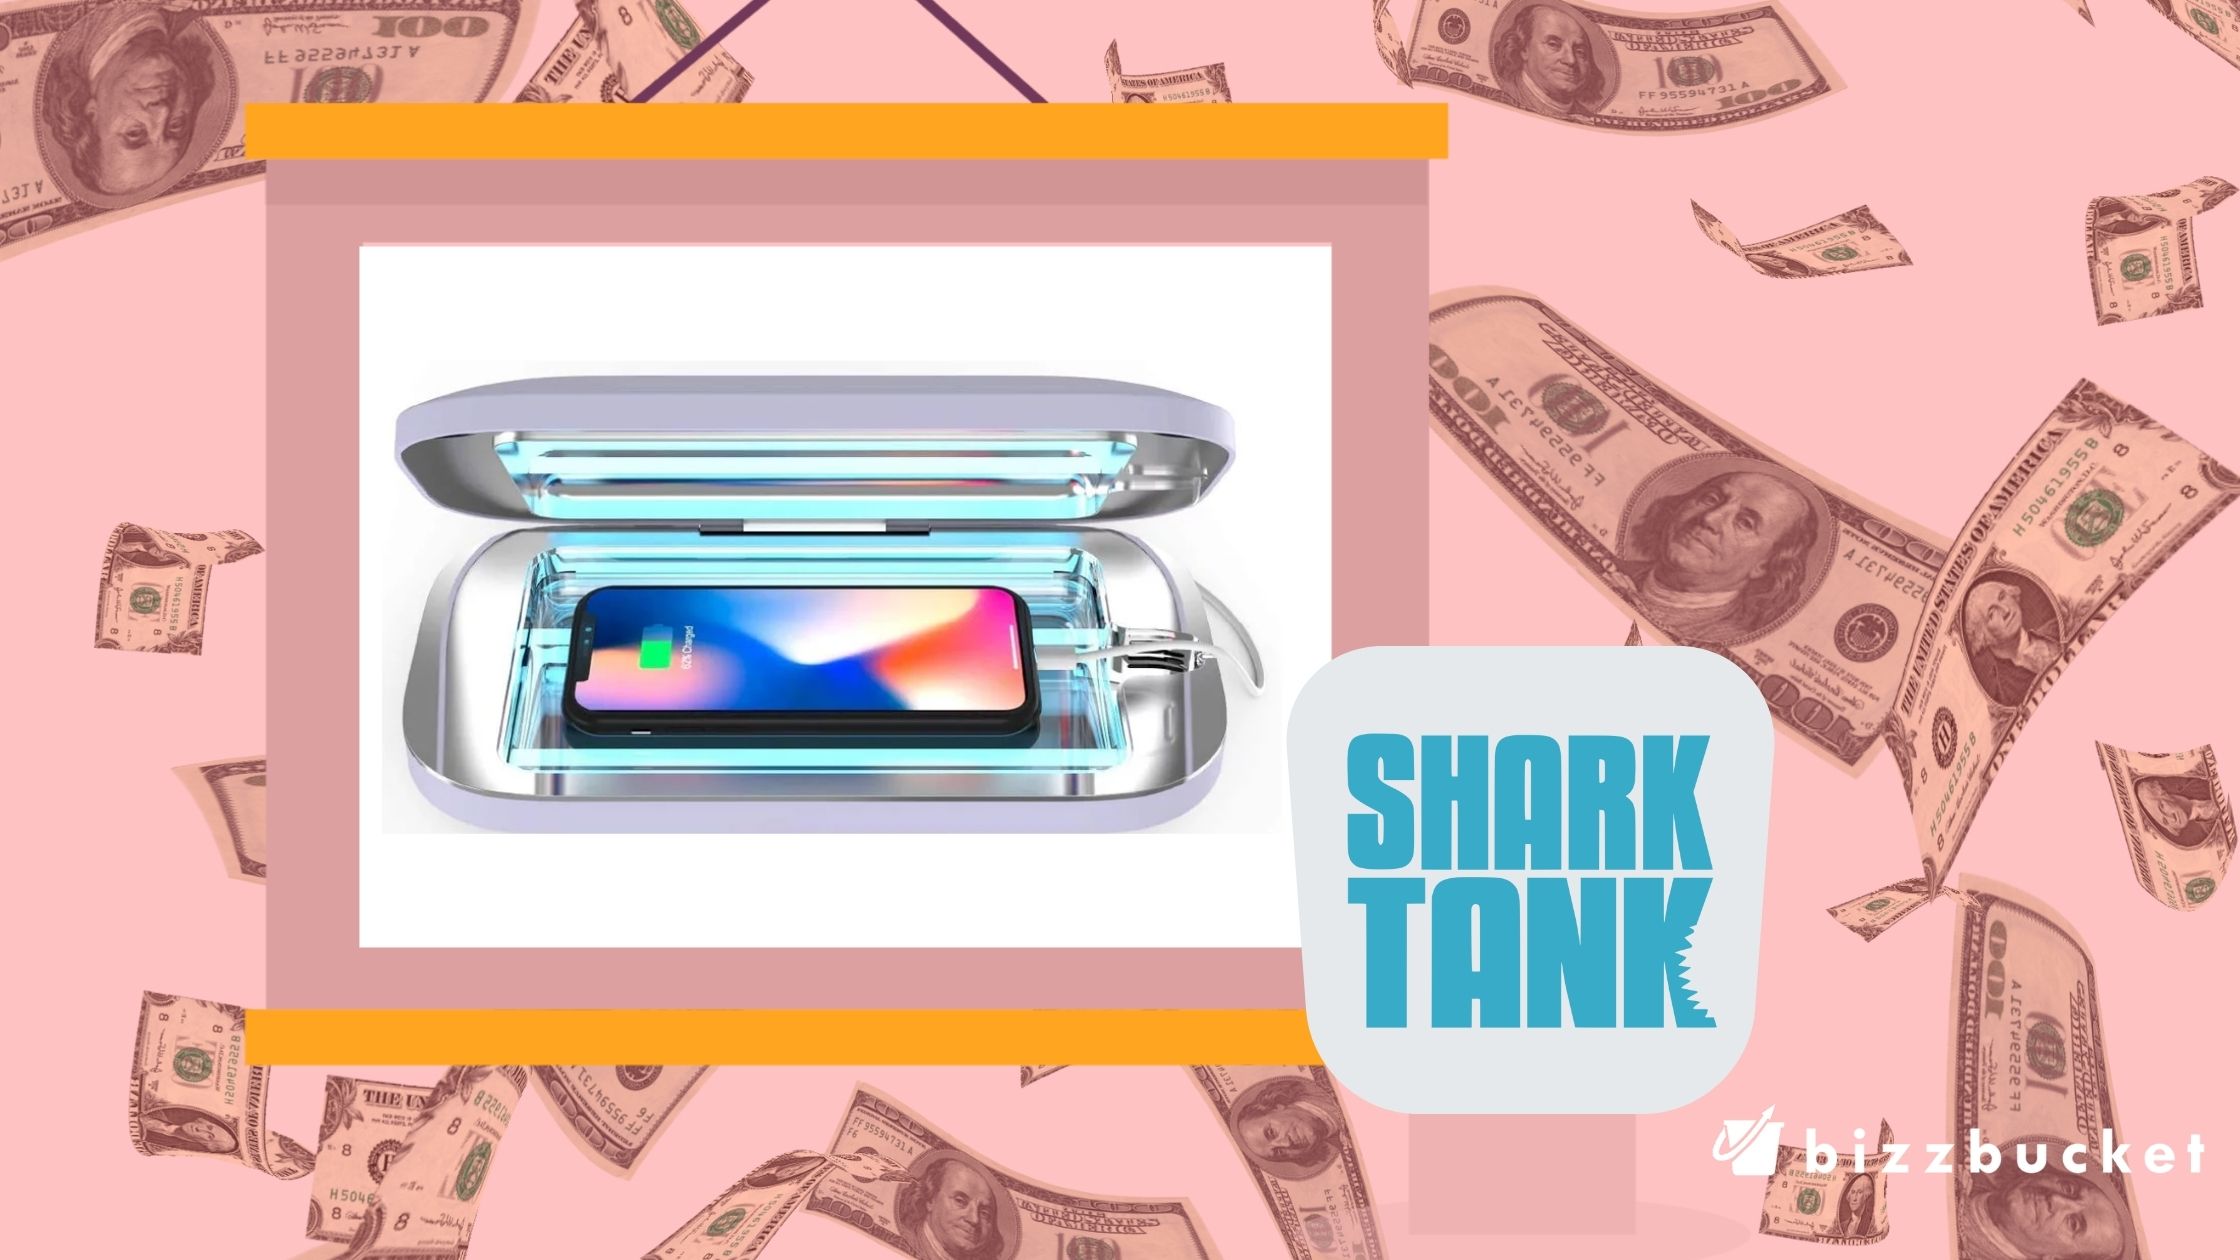 Phone Soap shark tank update